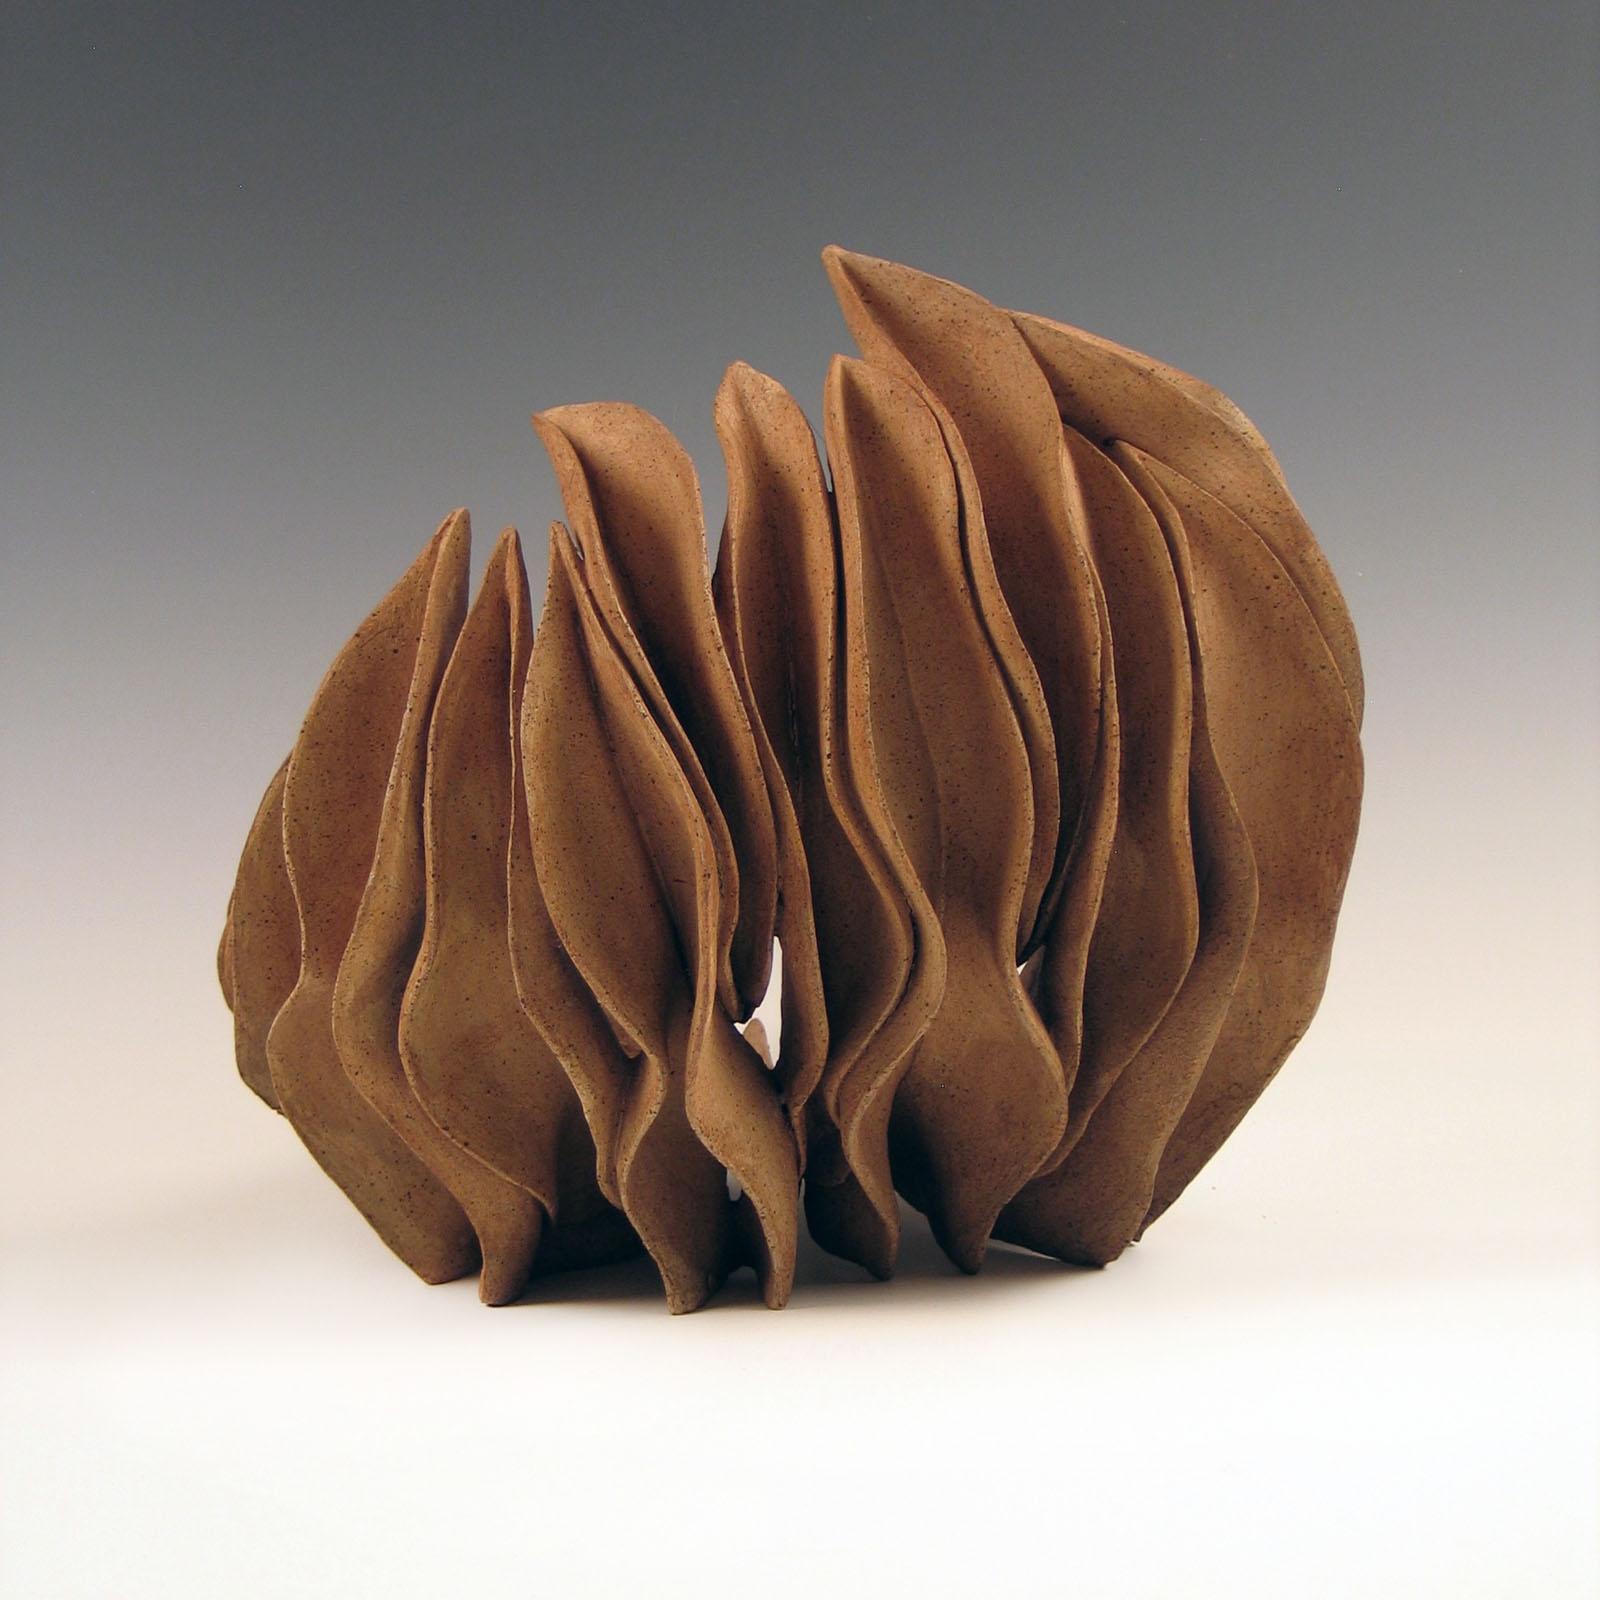 Elaine Lorenz Abstract Sculpture – "Fragment 3”, layered ceramic shell, swirls in rich browns